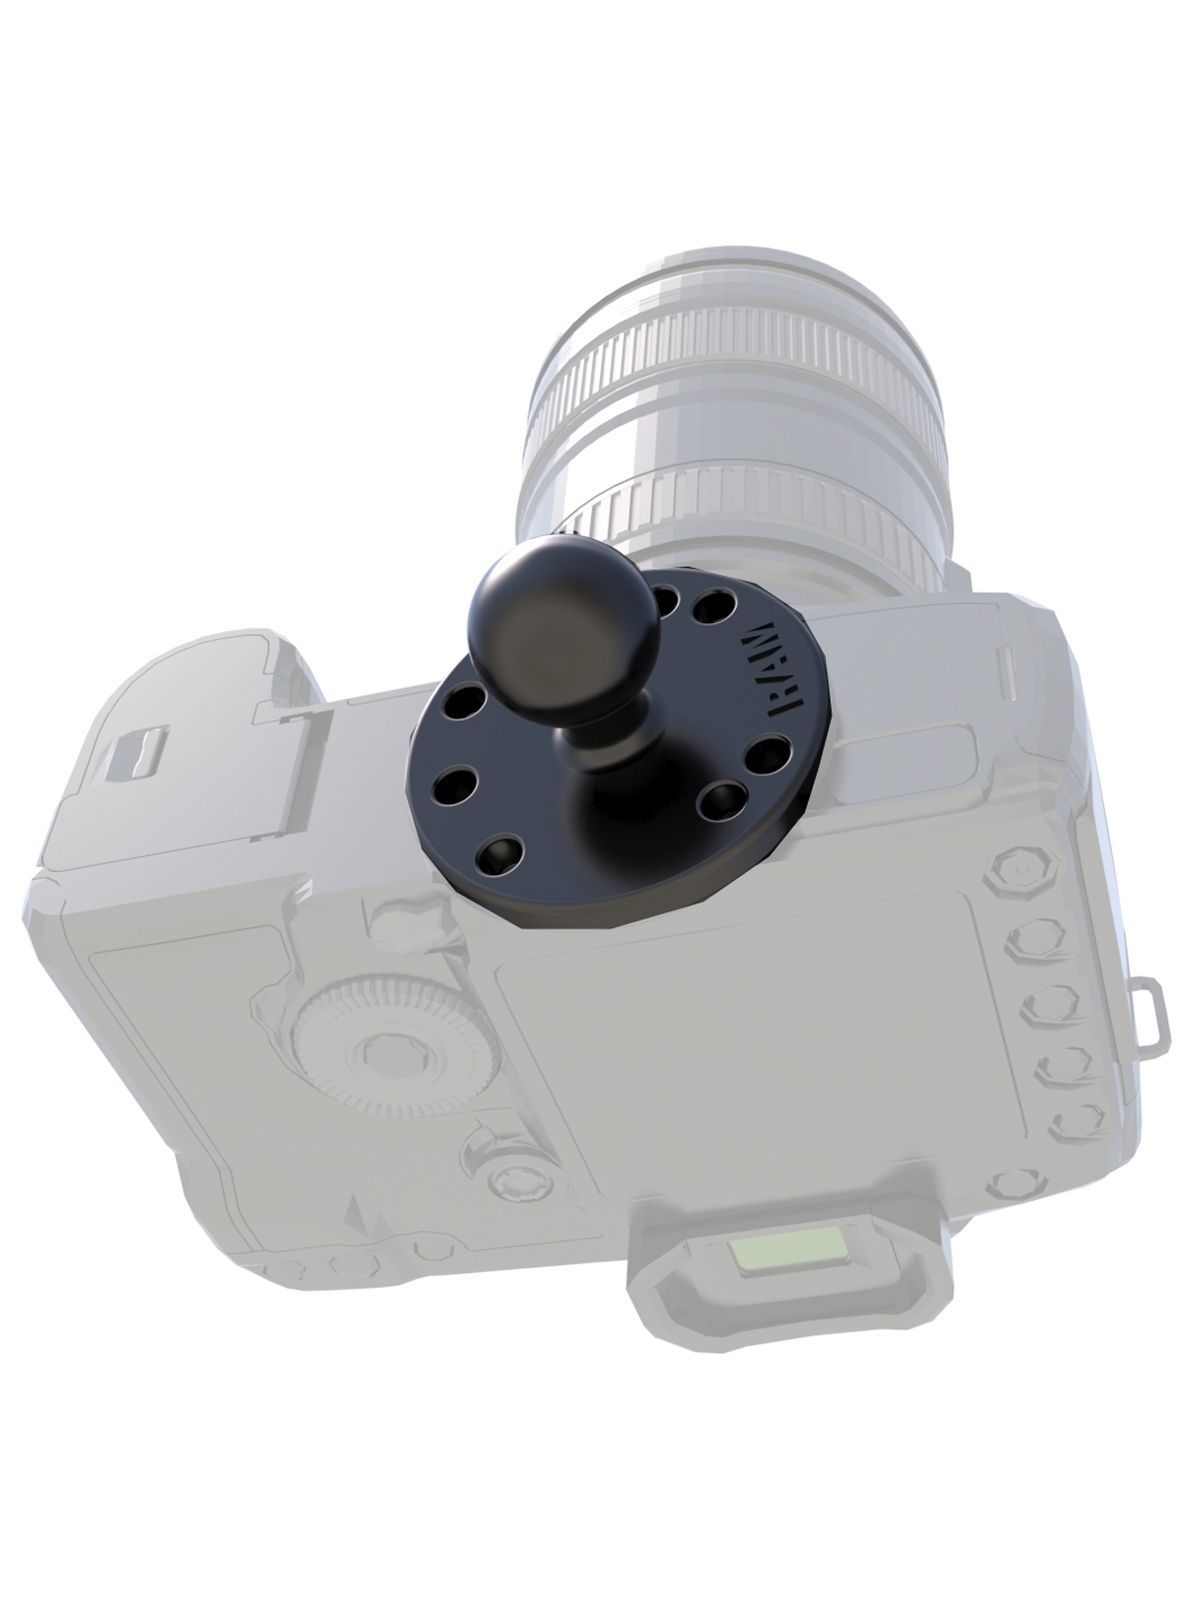 RAM Mounts Saugfuss-Kamerahalterung mit 1/4"-20 Gewindestift - mit Saugfuss, B-Kugel (1 Zoll), im Polybeutel